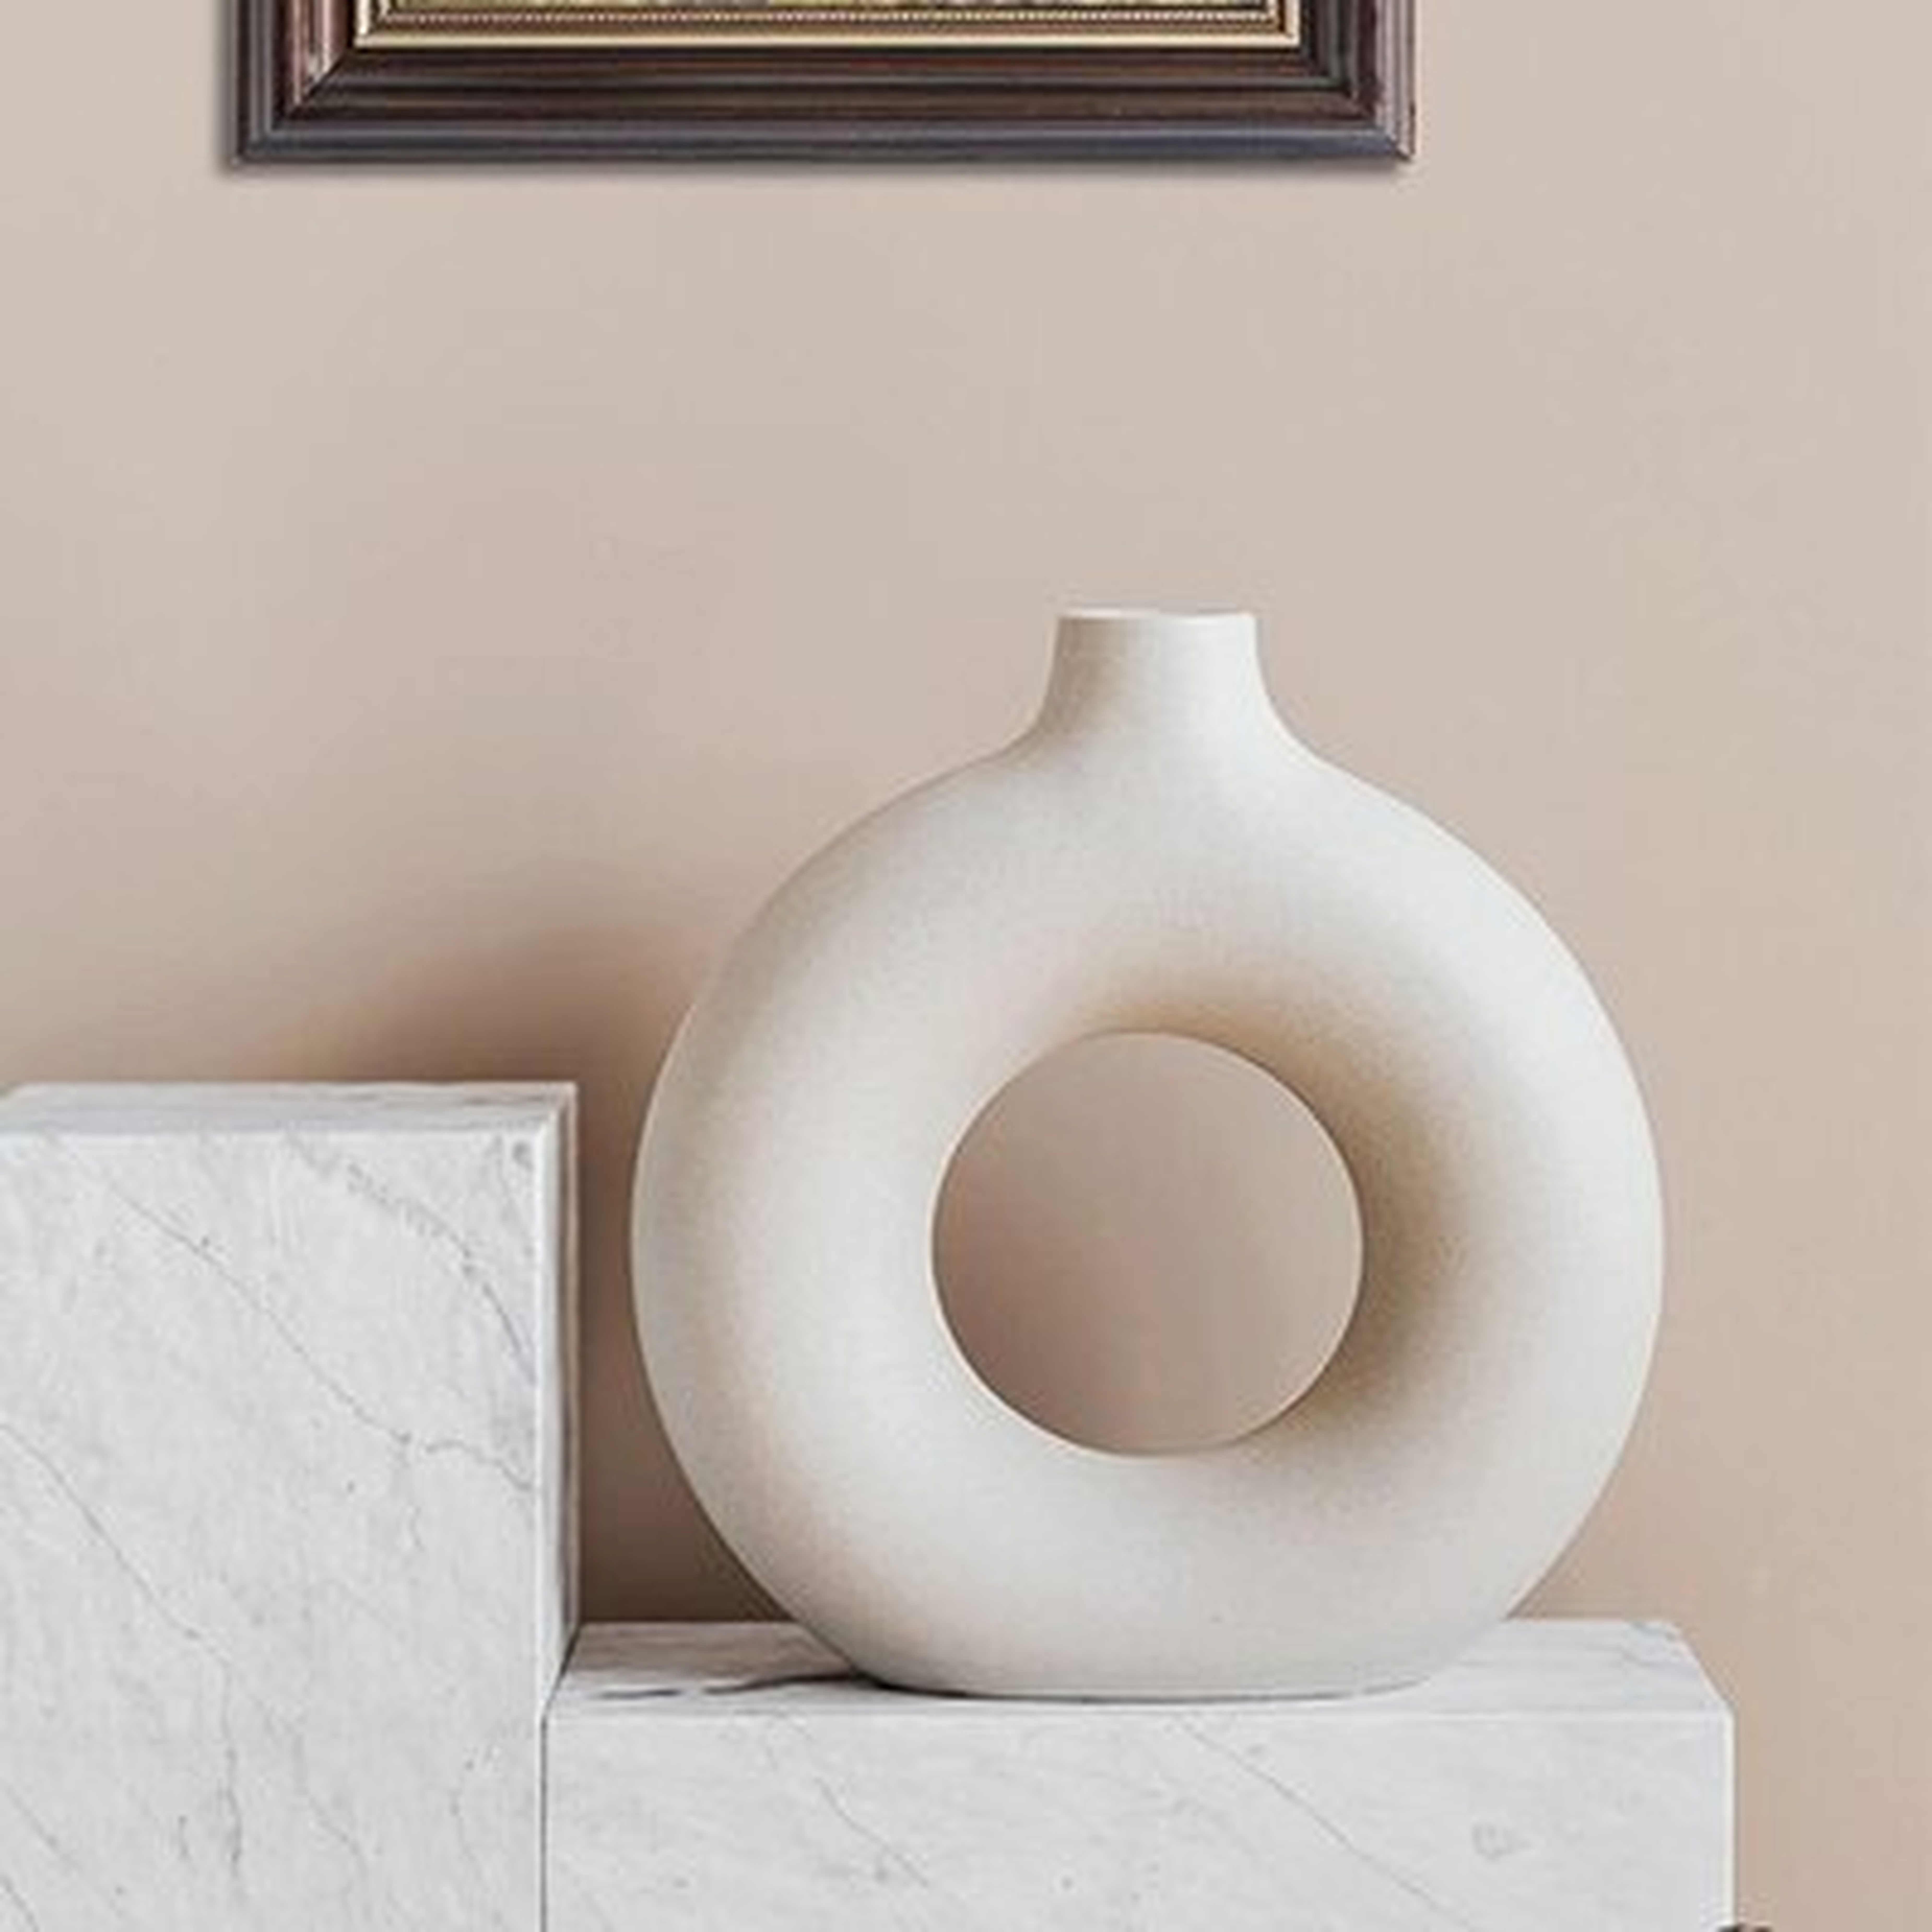 Ceramic Vase Modern Decorative Flower Vase Round Vase For Home Decor,Shelf Decor,Large Vase(Vase Only) - Wayfair